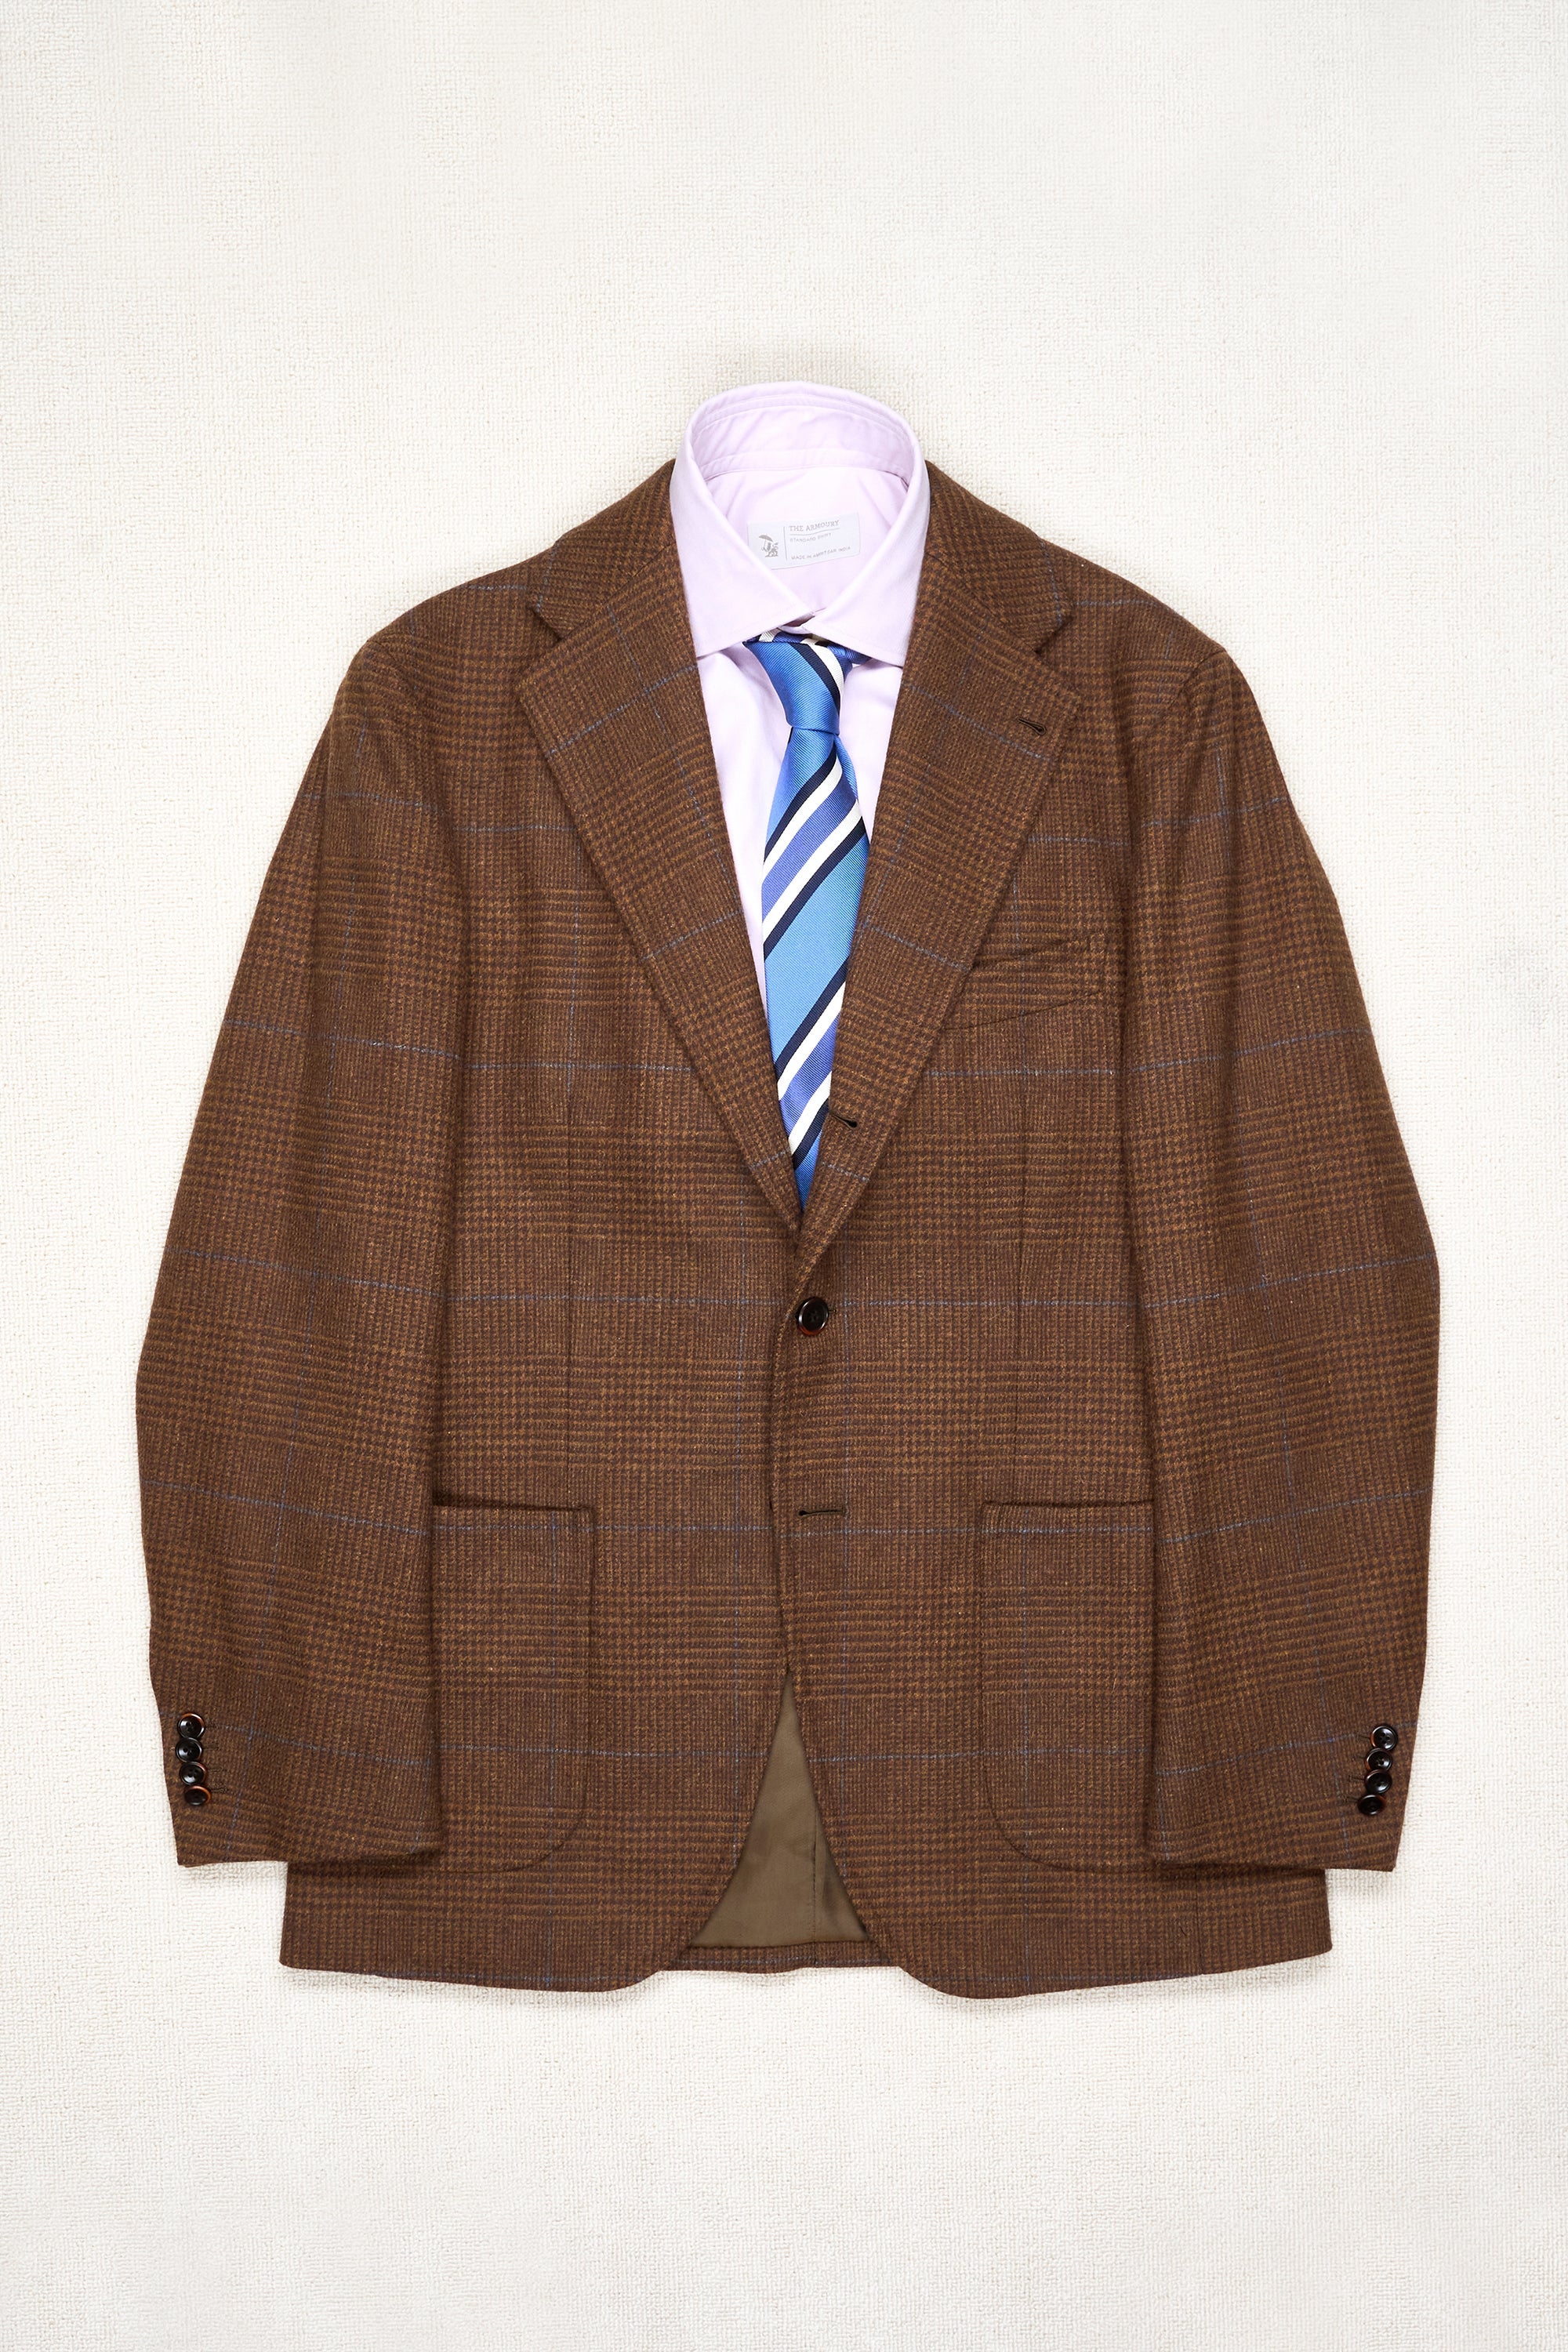 Casa Del Sarto Brown/Blue Prince of Wales Check Wool Sport Coat